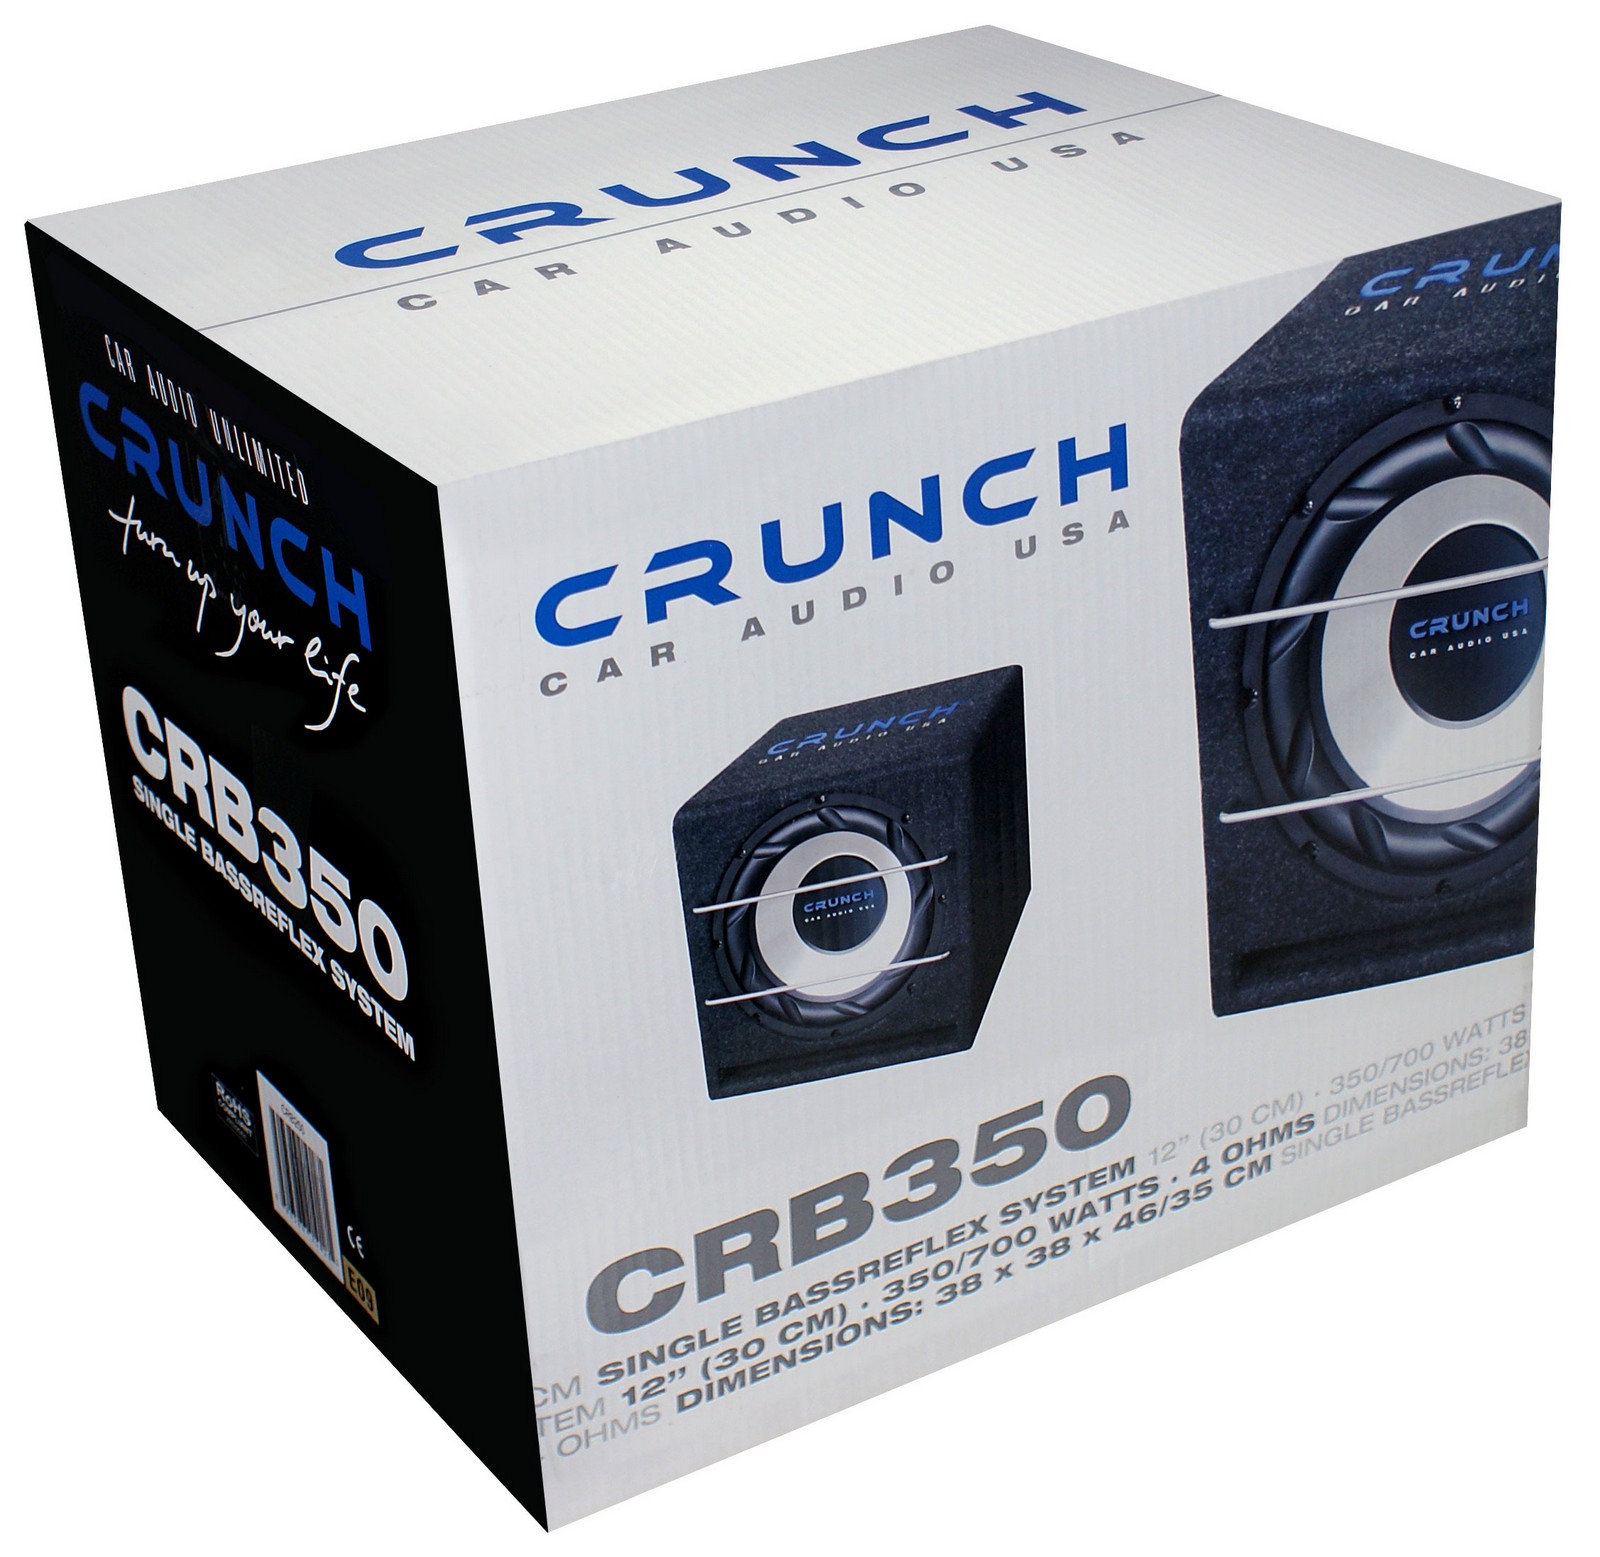 Crunch CRB-350 30cm Bassreflexbox 700 Watt CRB350